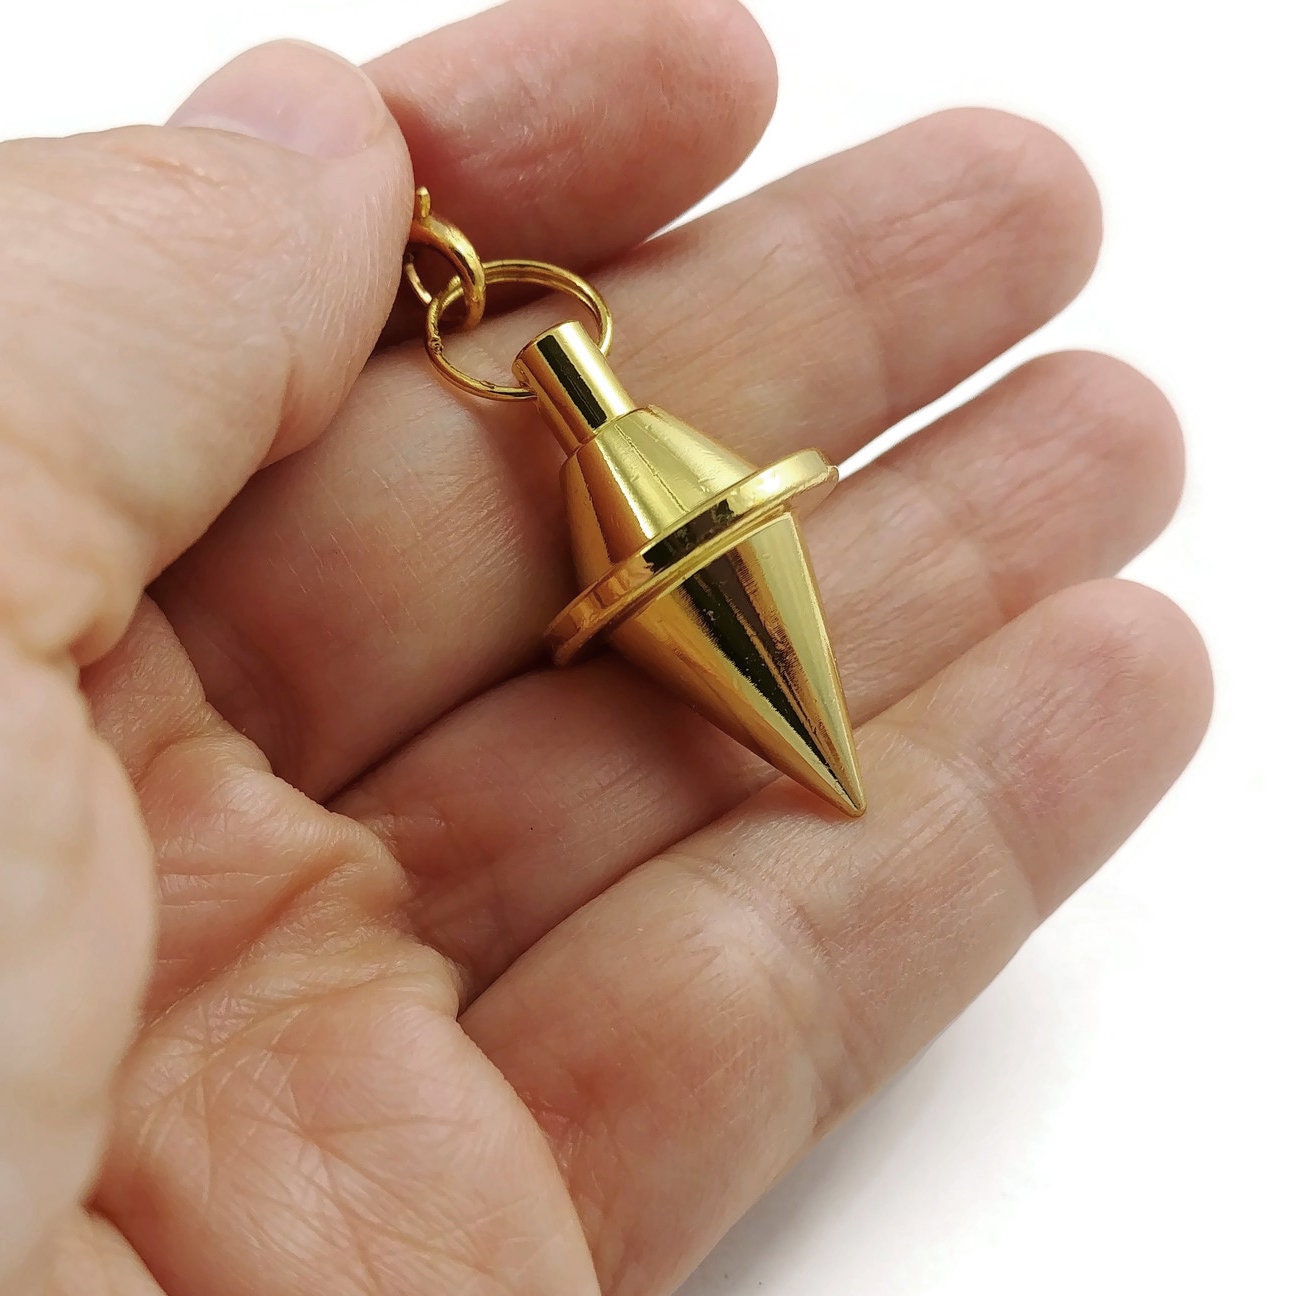 Metal dowsing bullet pendulum - Silver, gold, rose gold or antique bronze